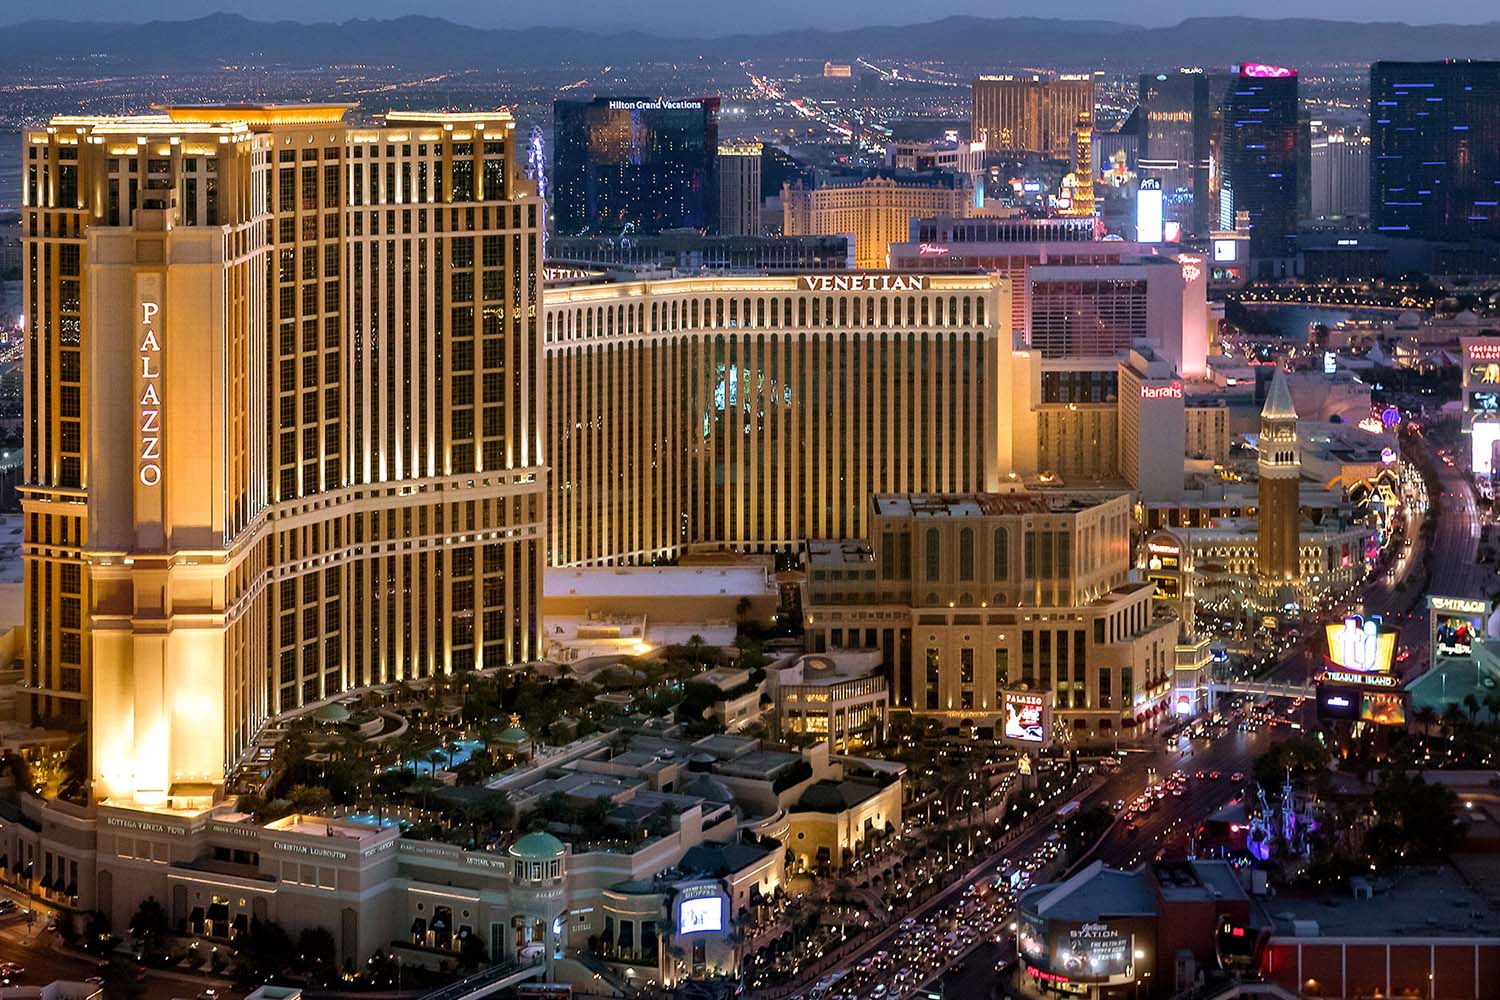 Hotel Guide: The Venetian Las Vegas!